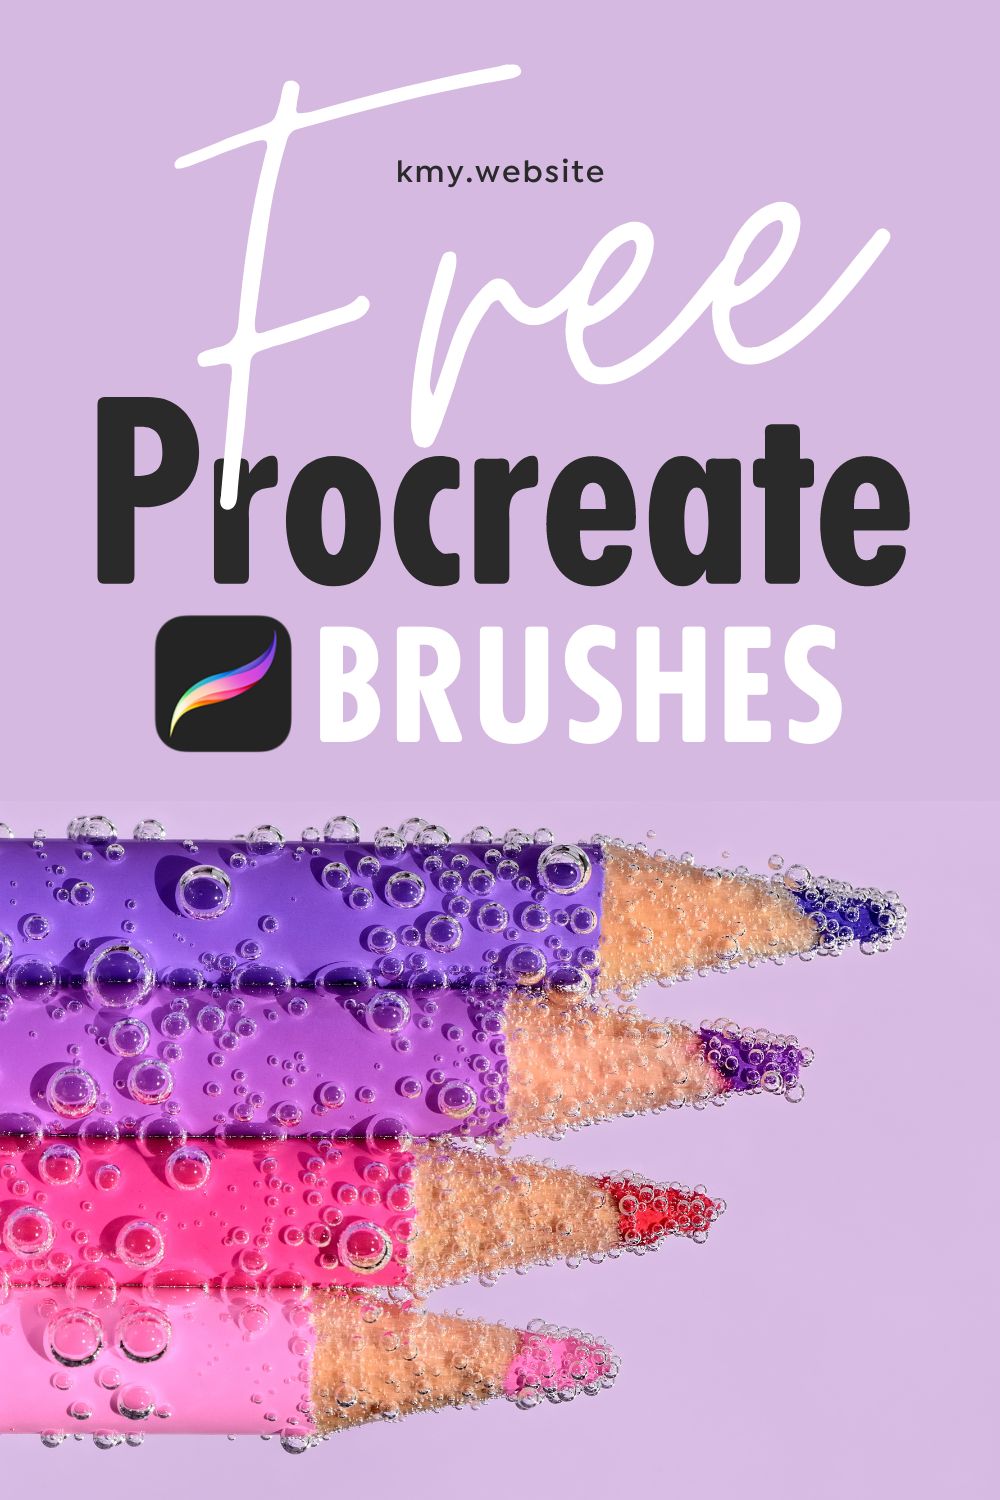 16 Procreate Gouache Brushes Free download - Procreate brushes